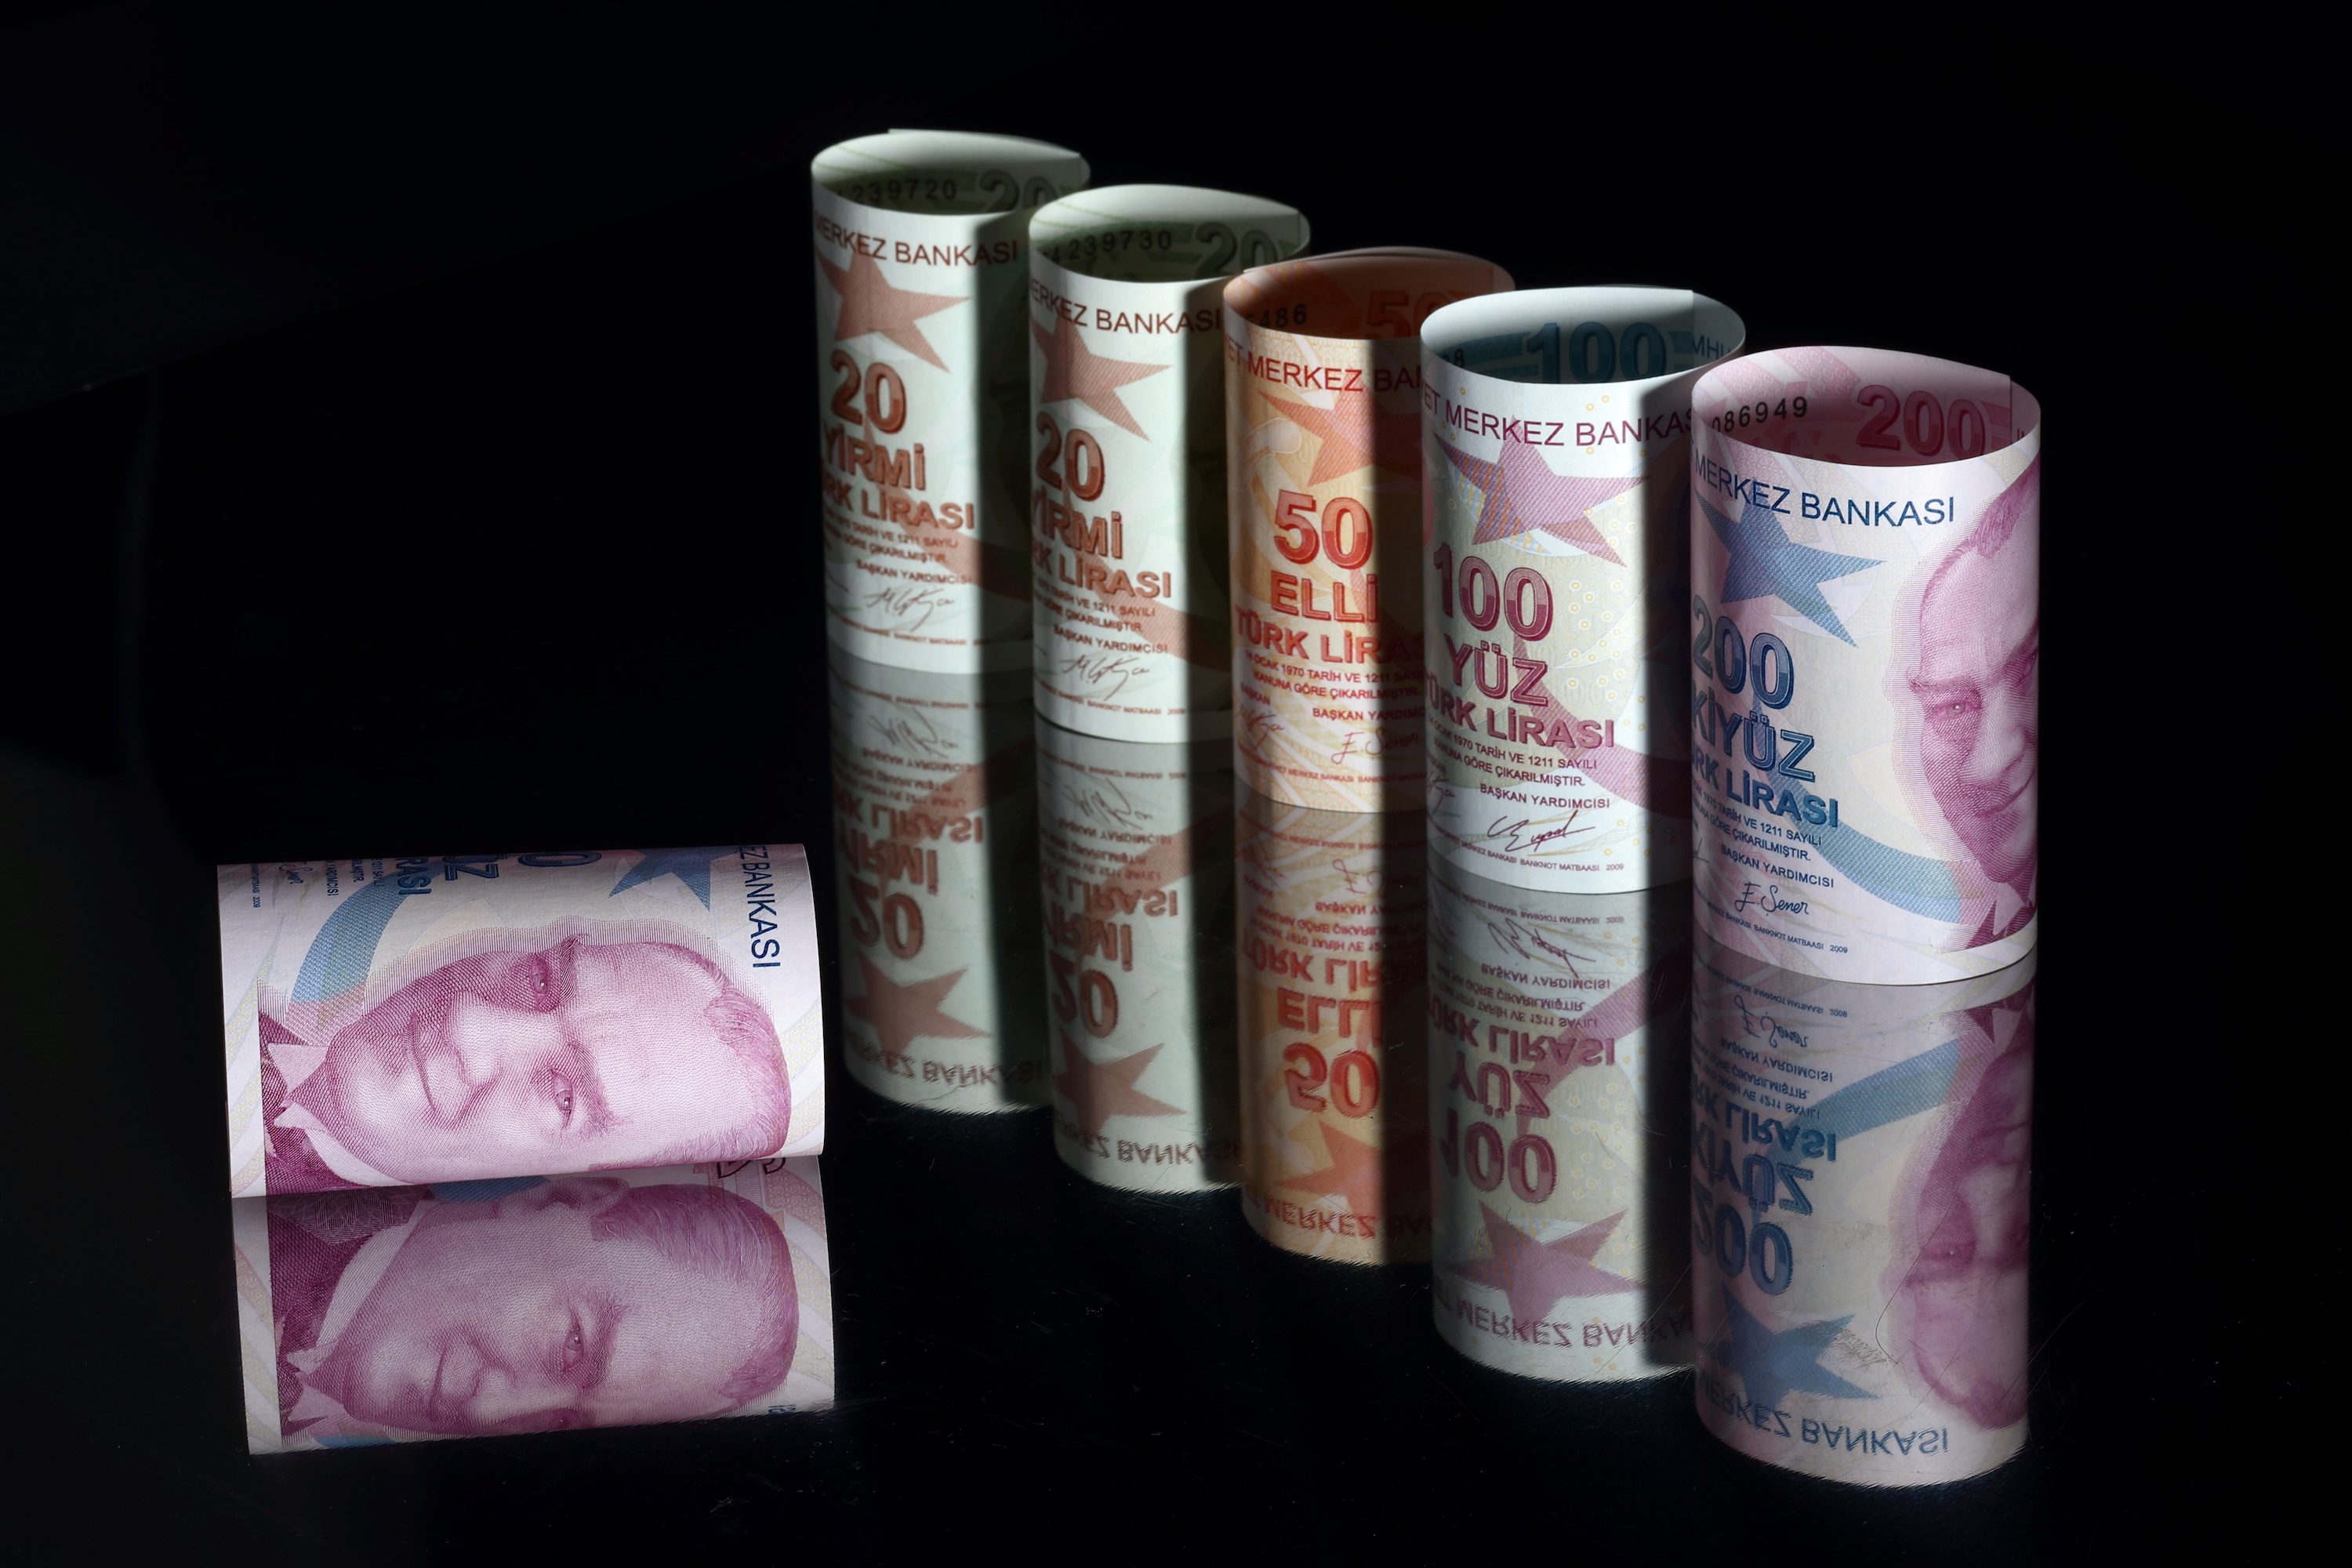 Free-falling lira puts Turkey in balance of payments danger